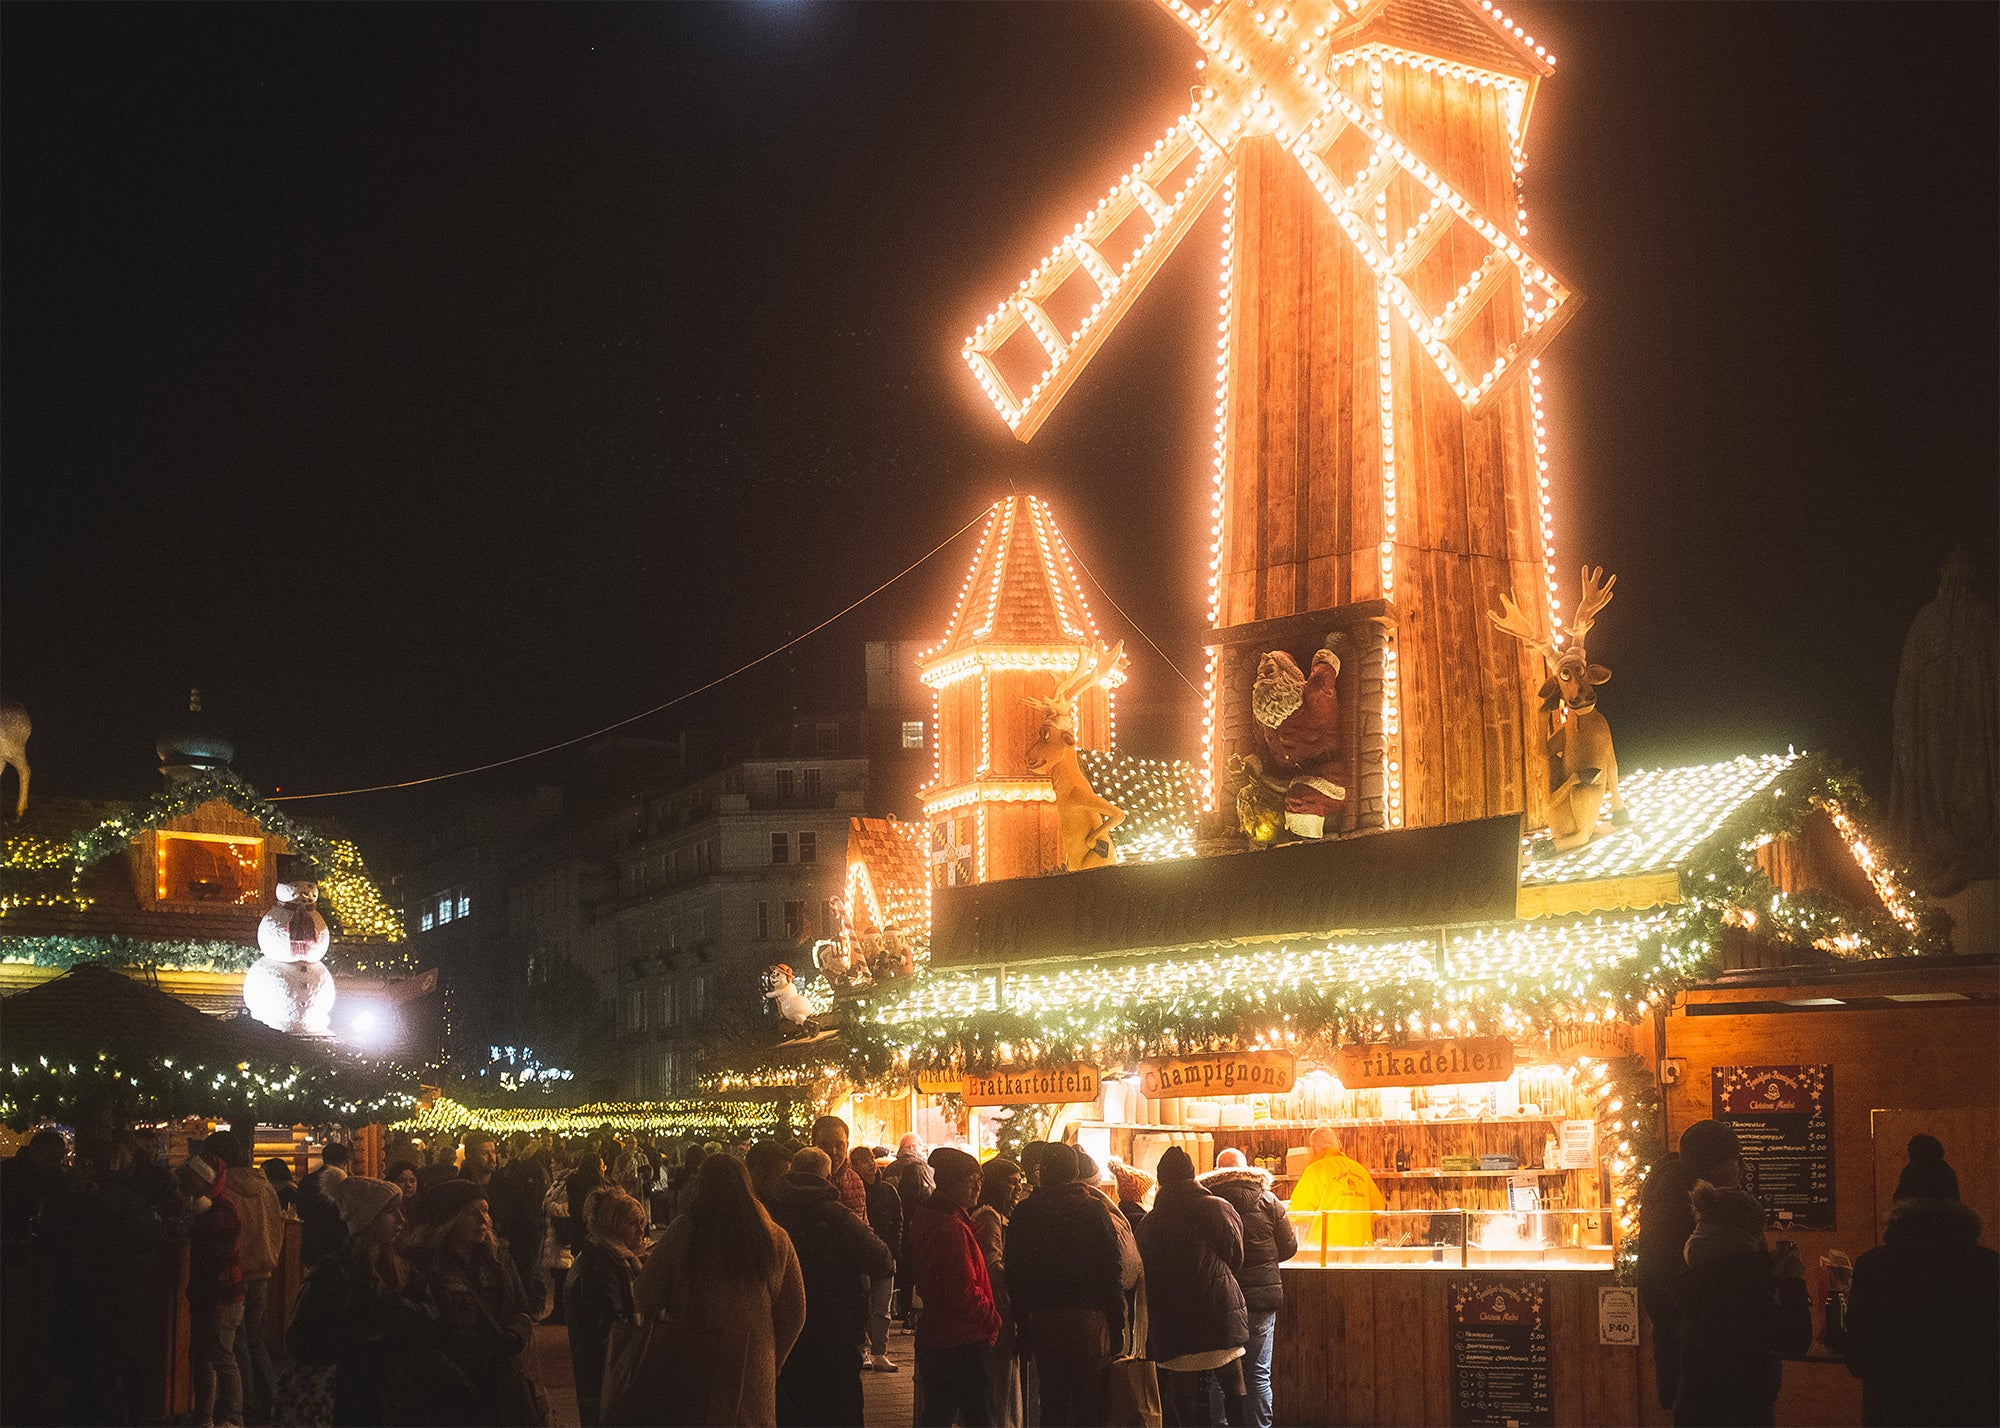 German Christmas Markets: Exploring "Christkindlmarkt" and "Weihnachtsmarkt" Traditions